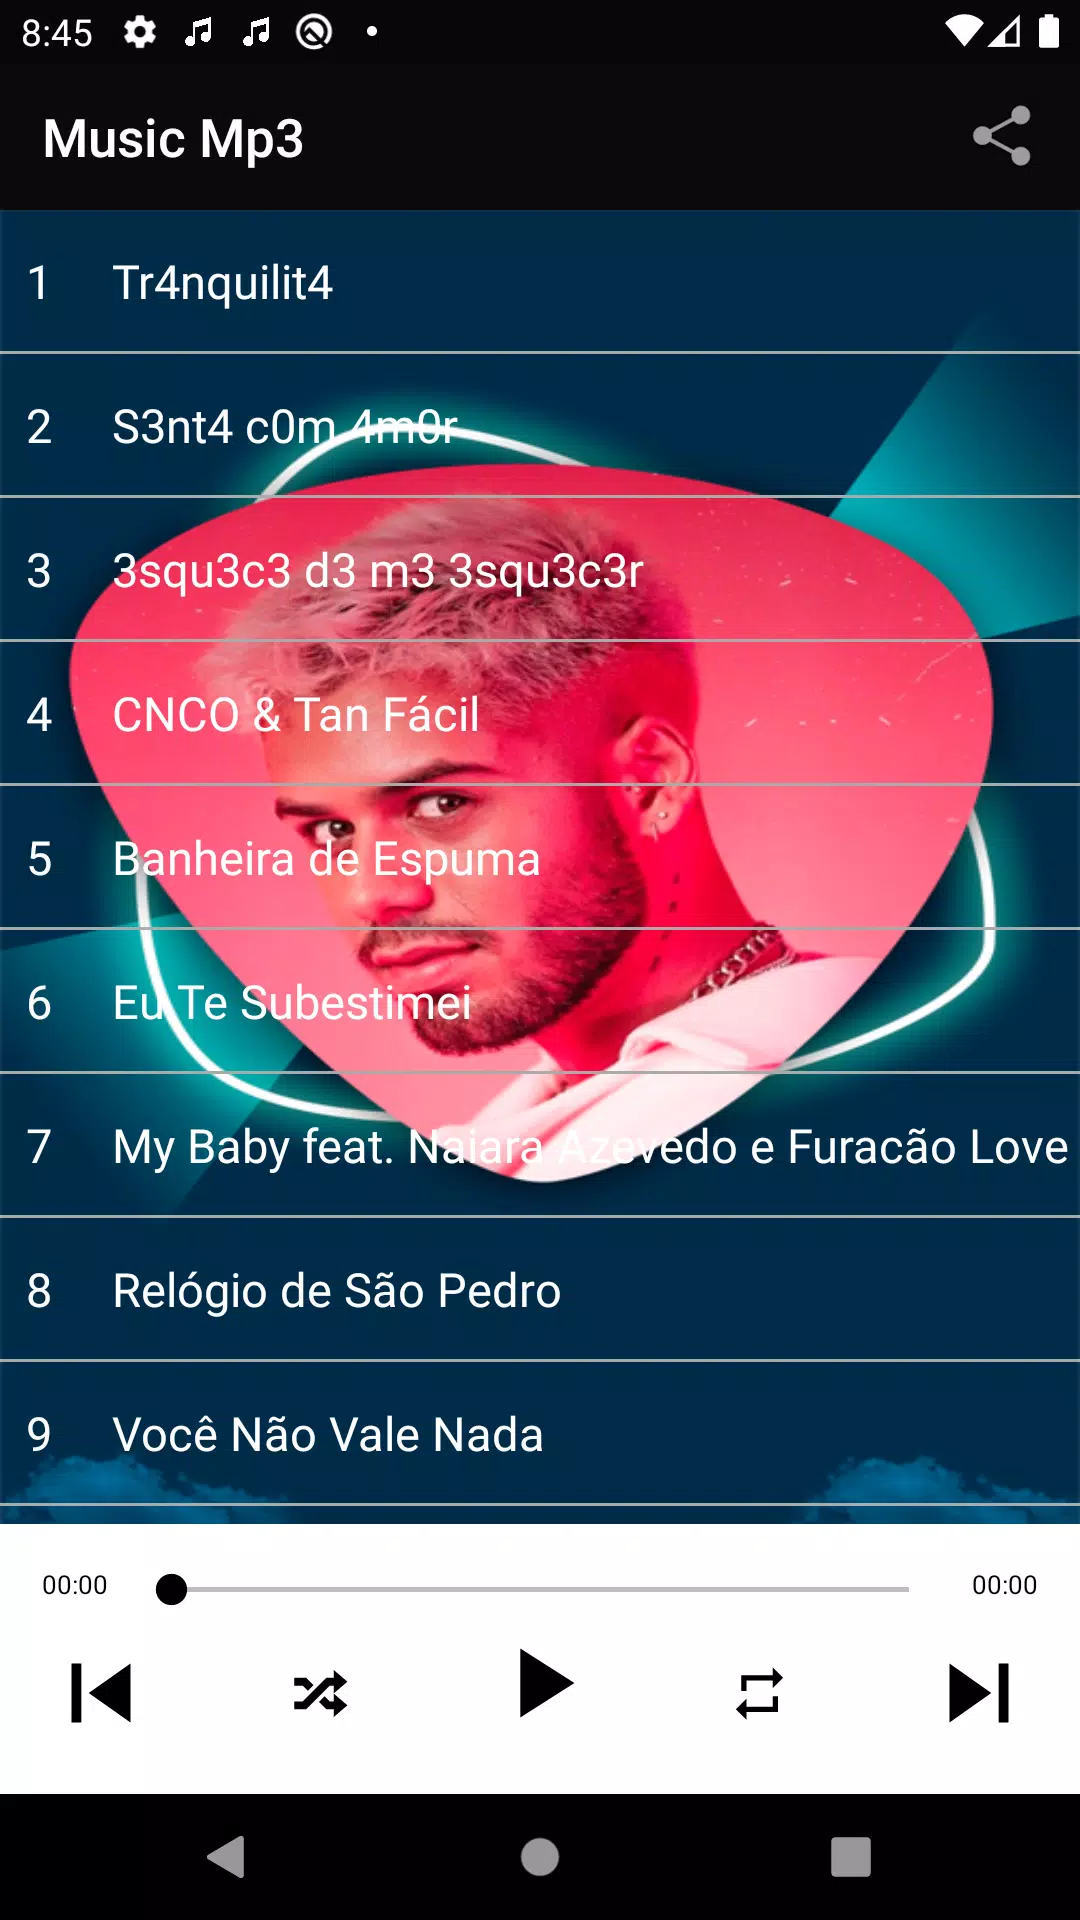 My Baby (feat. Naiara Azevedo & Furacão Love) - Zé Felipe